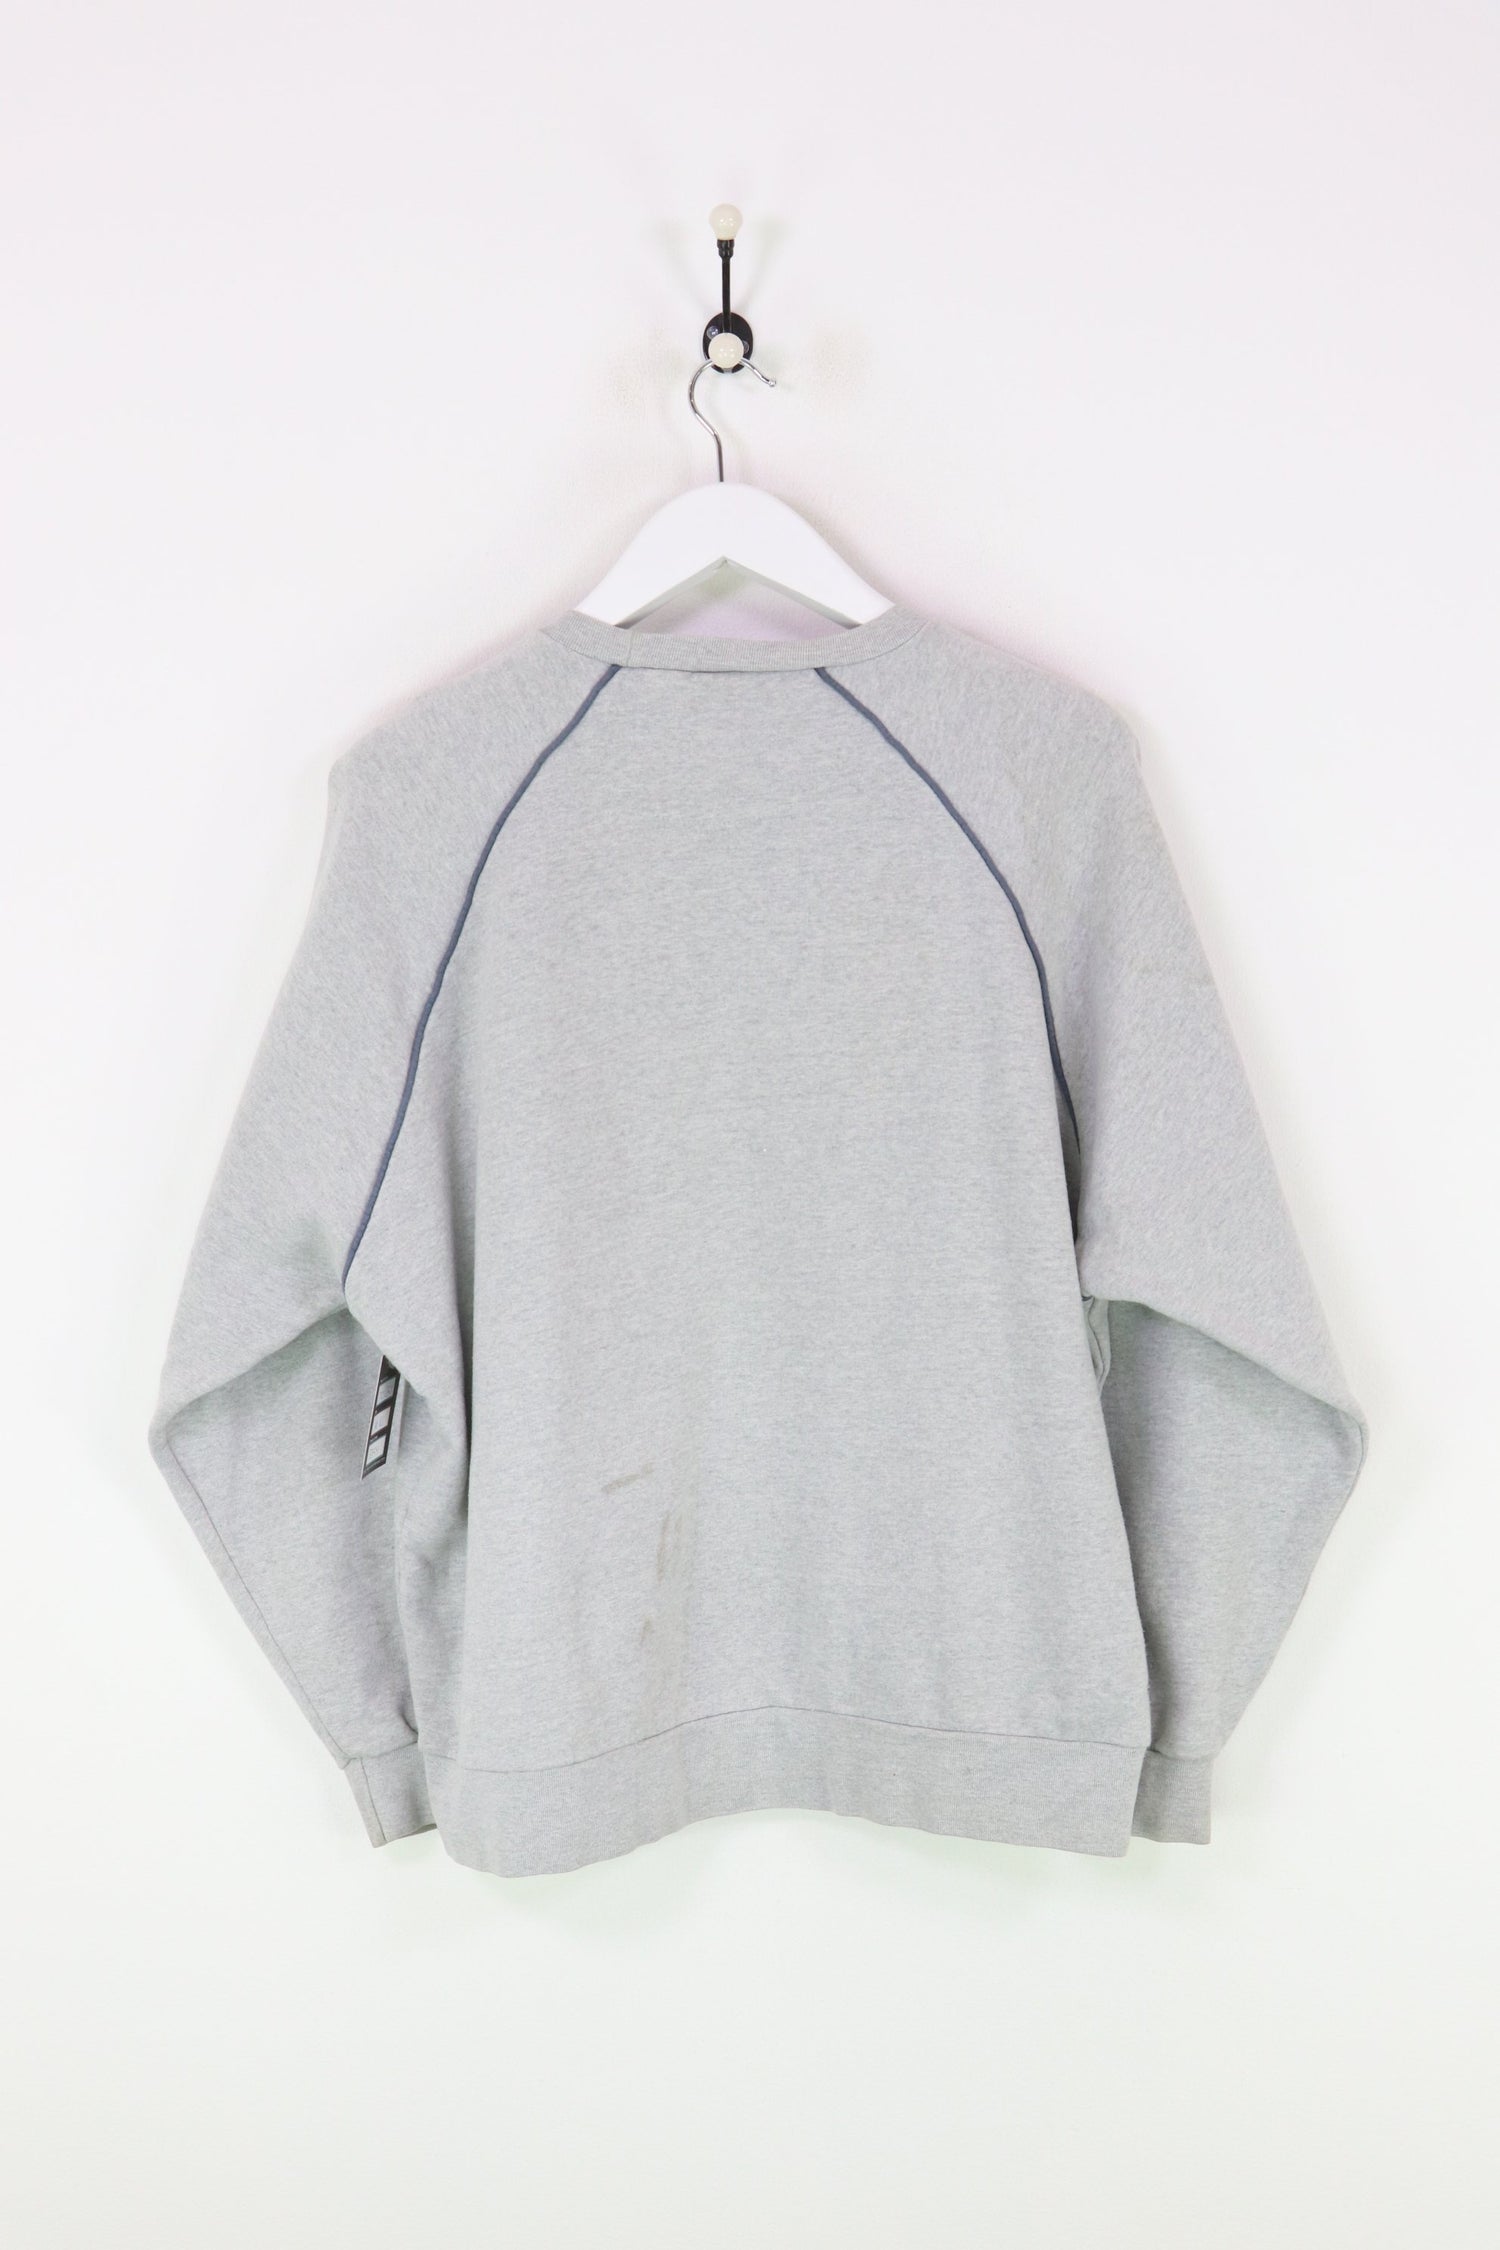 Levi's Sweatshirt Grey Medium